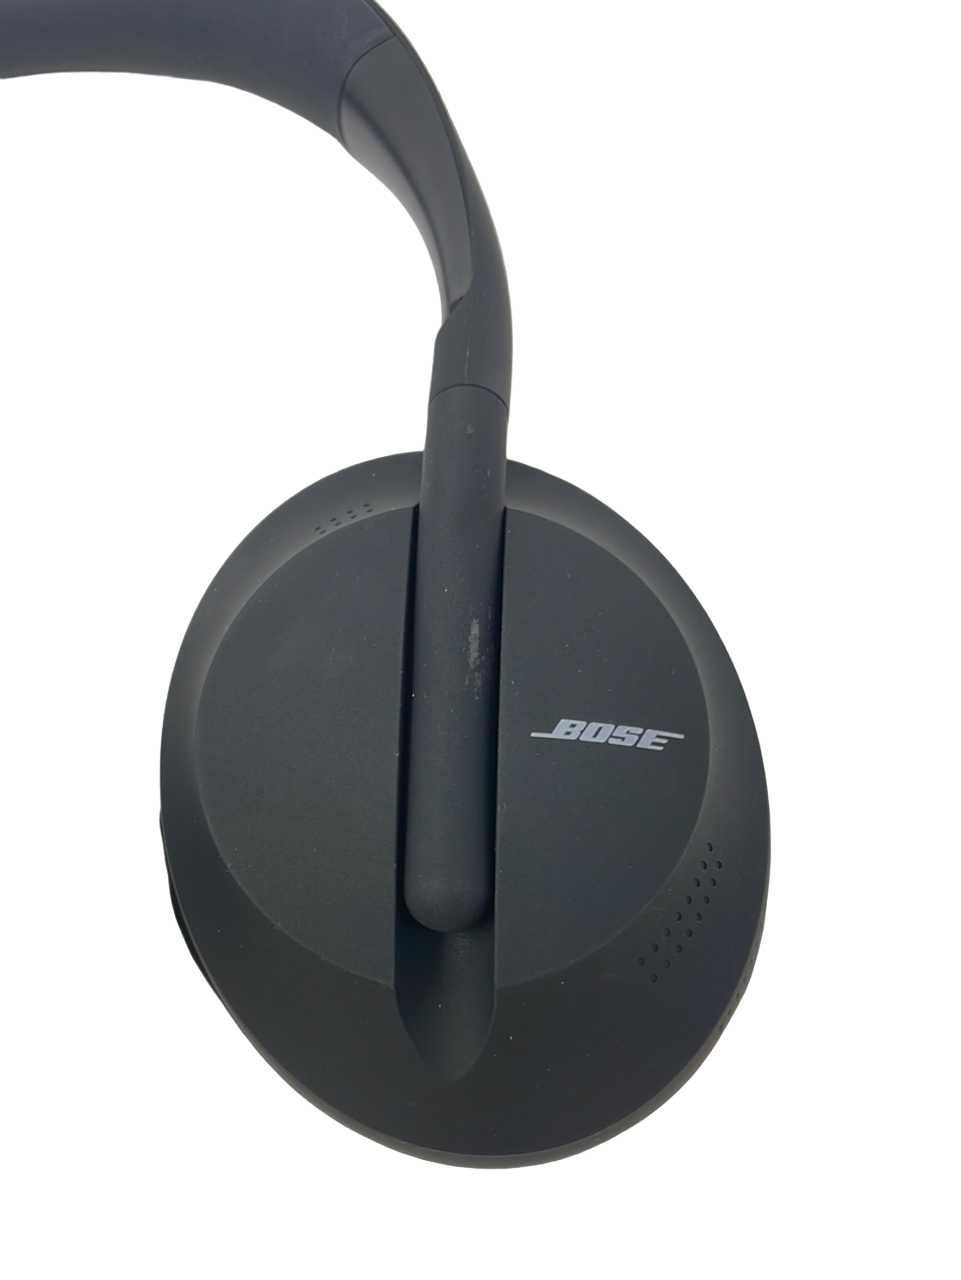 Bose Noise Cancelling Wireless Bluetooth Headphones 700 - Black